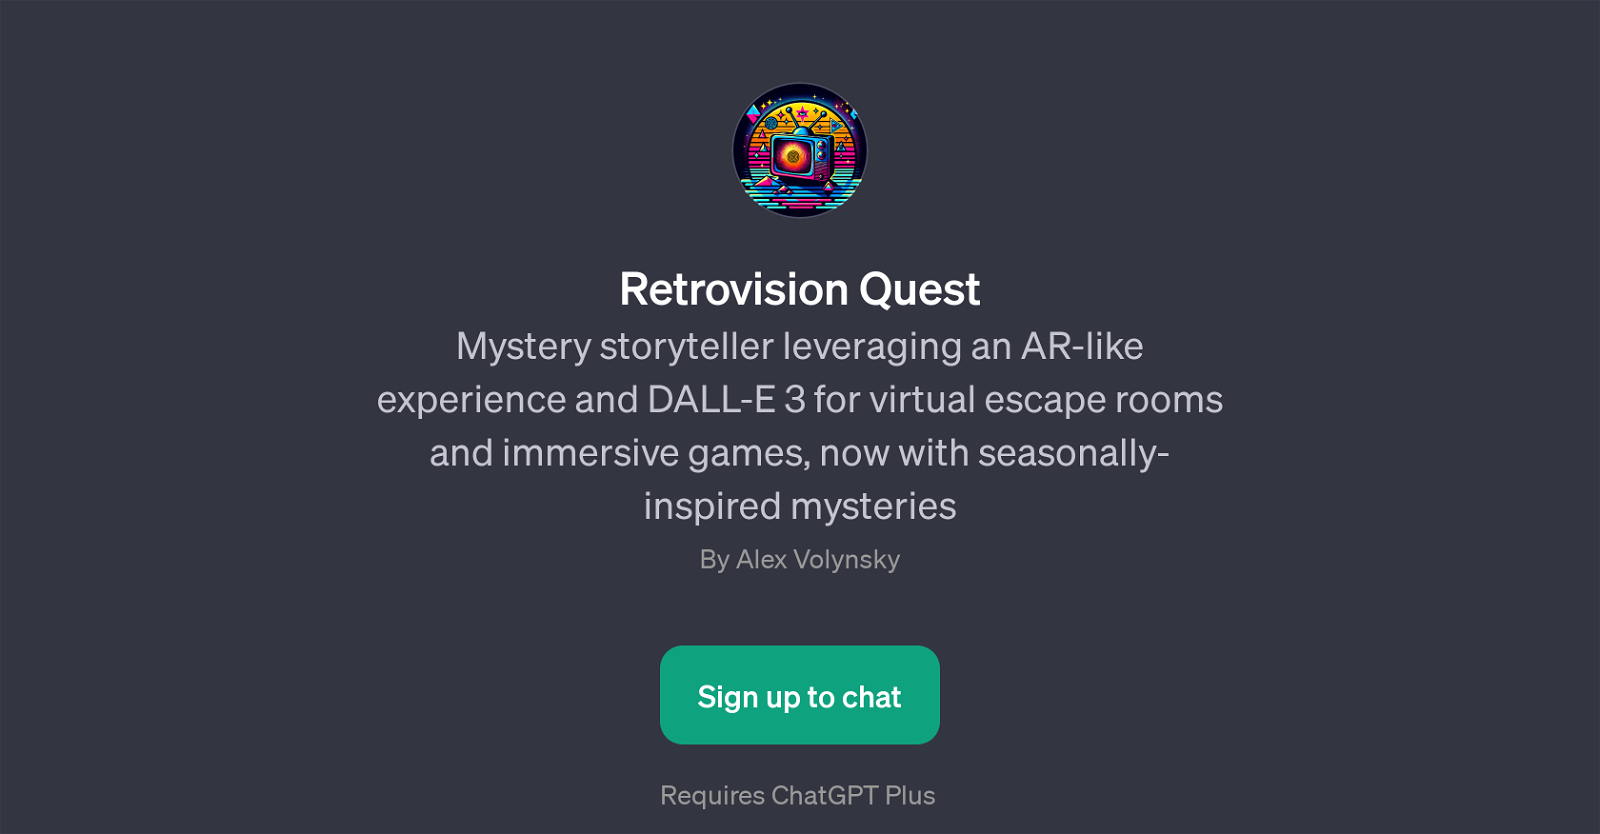 Retrovision Quest website